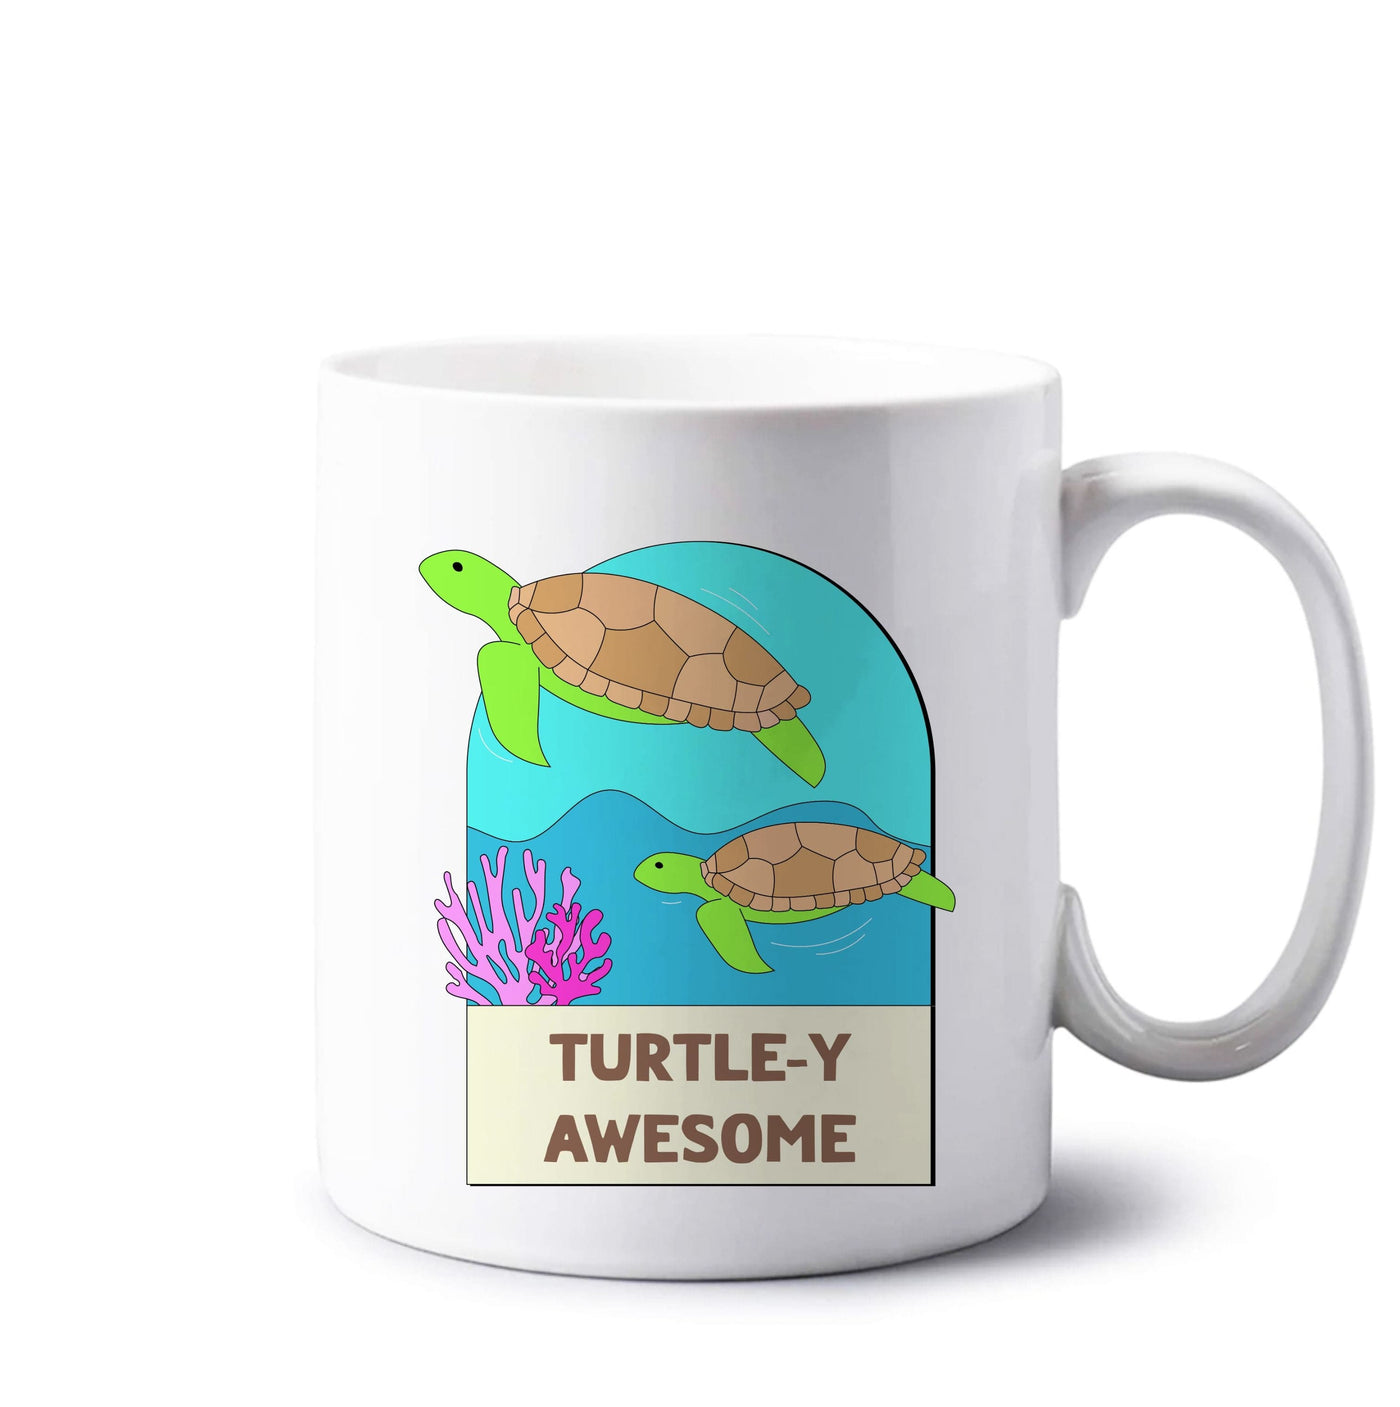 Turtle-y Awesome - Sealife Mug